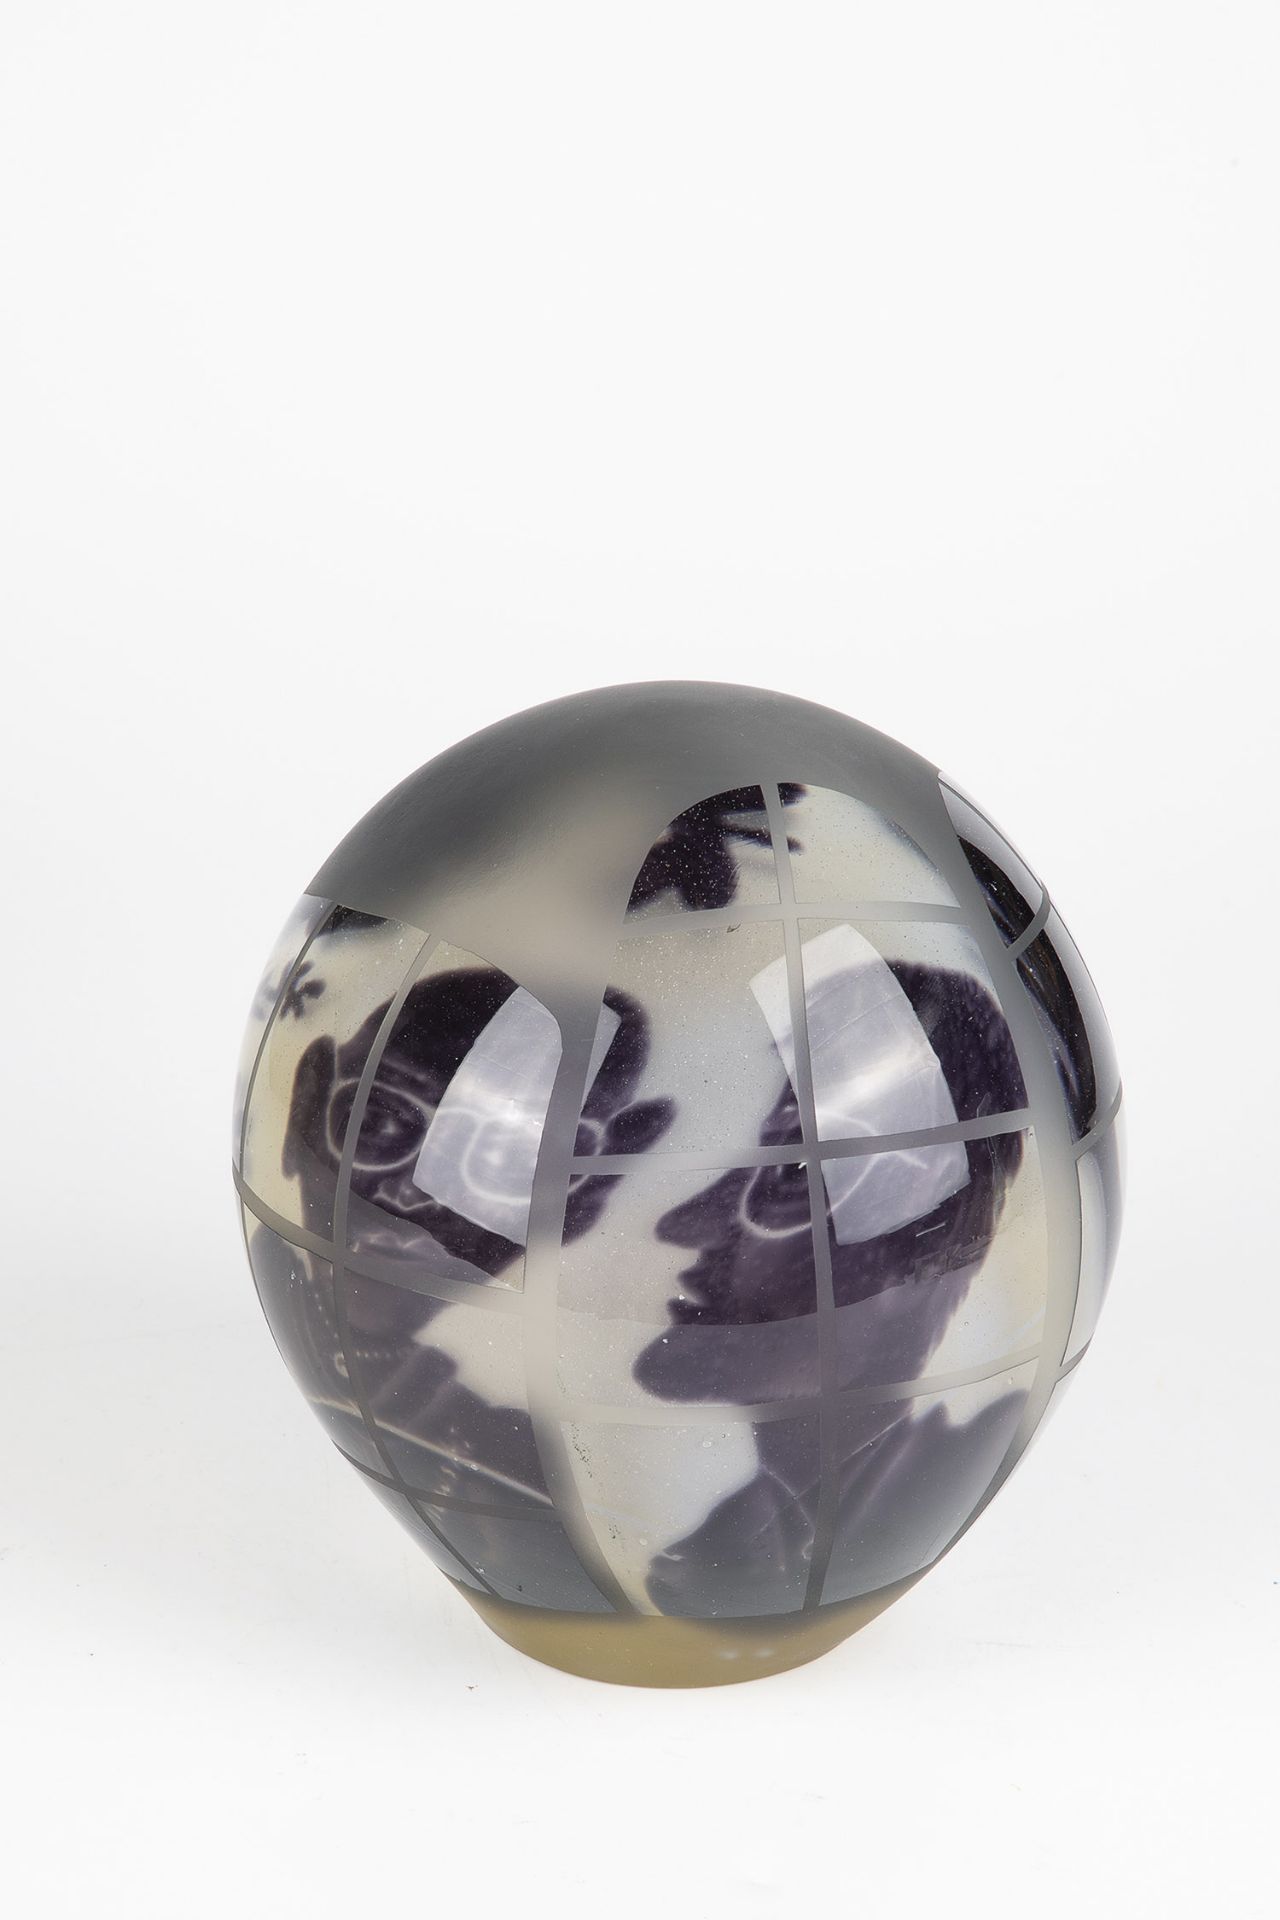 Object Stanislaw Borowski, 1988 Colourless glass with white-grey opal underlay. After intermediate